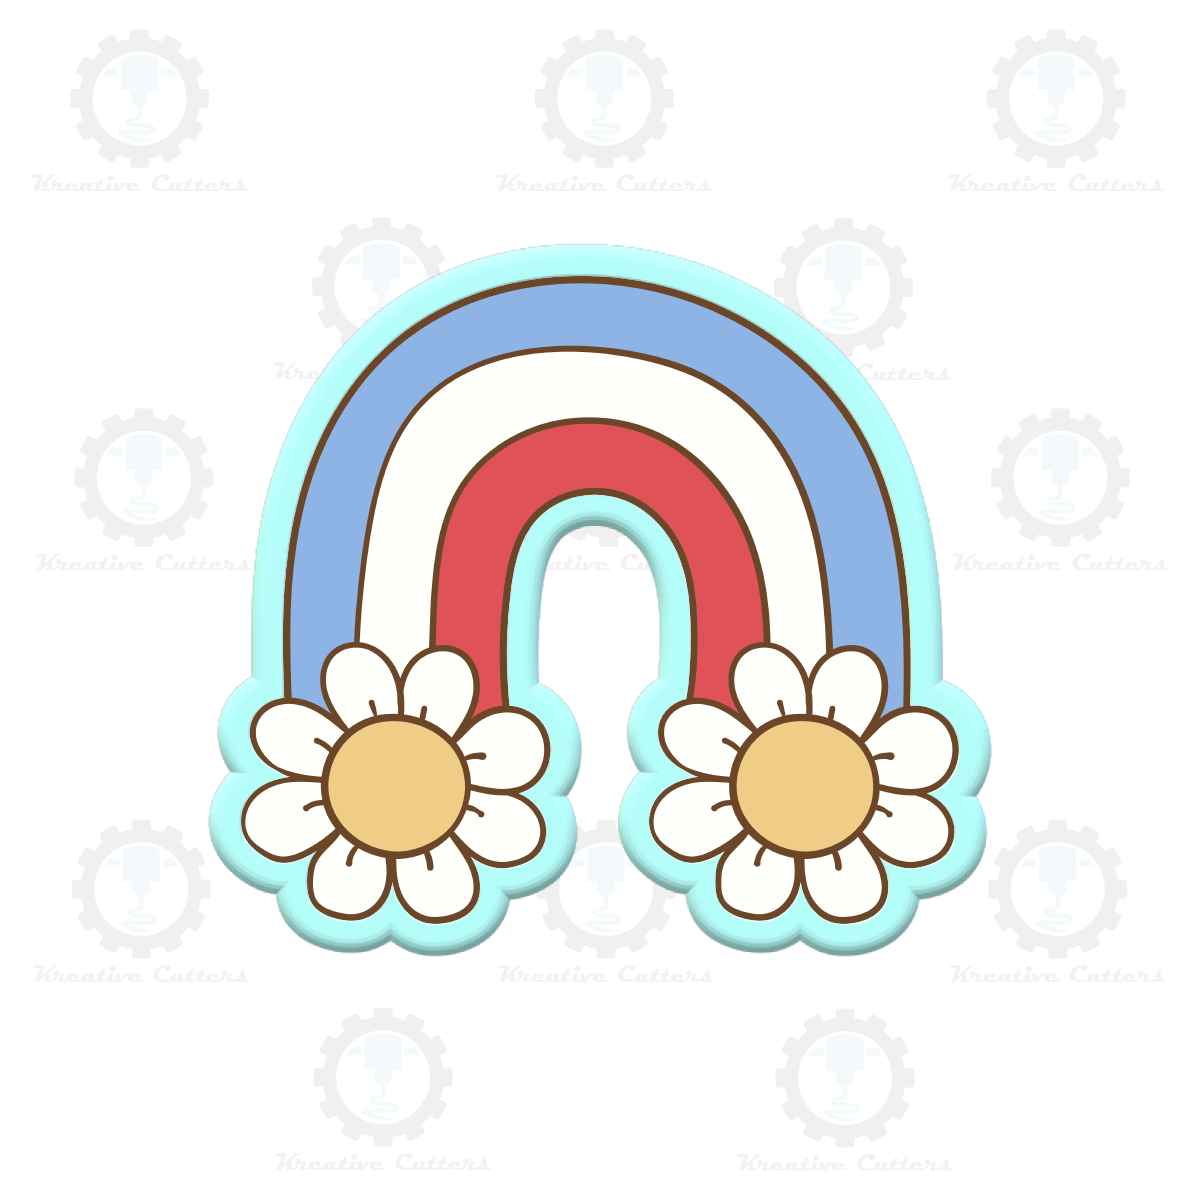 Groovy Flower Rainbow Cookie Cutters